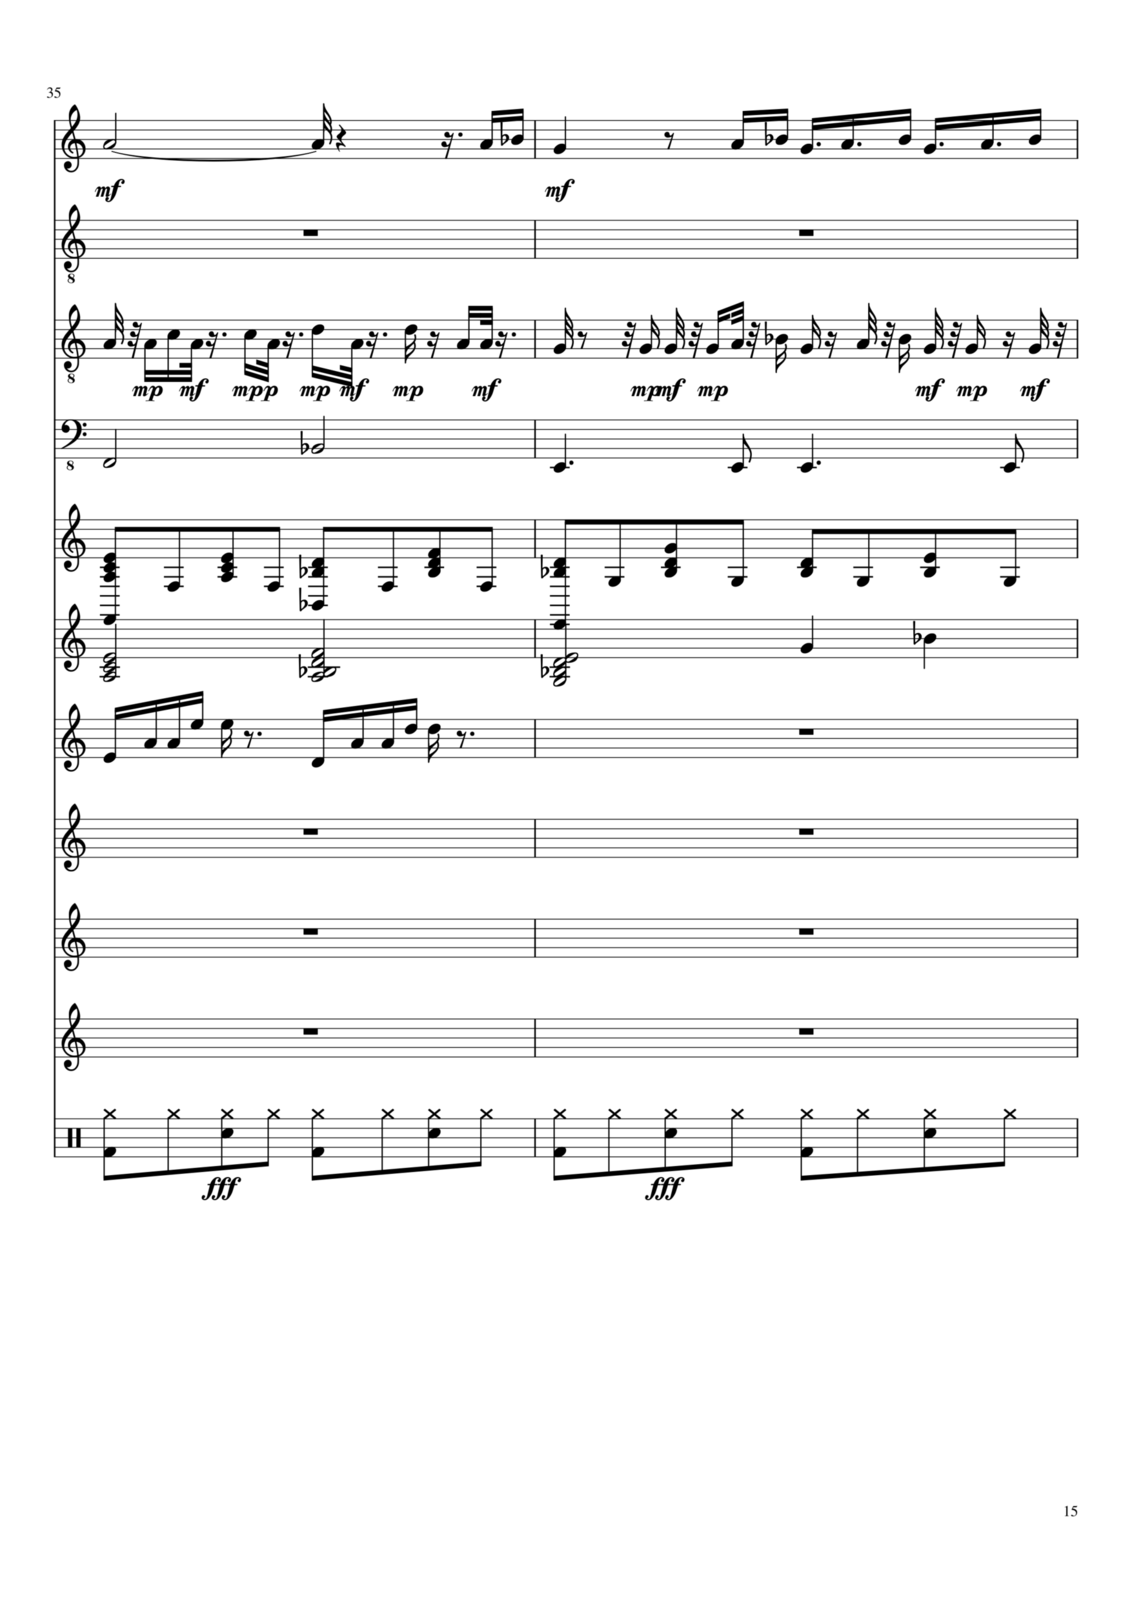 Gorod, kotorogo net slide, Image 15